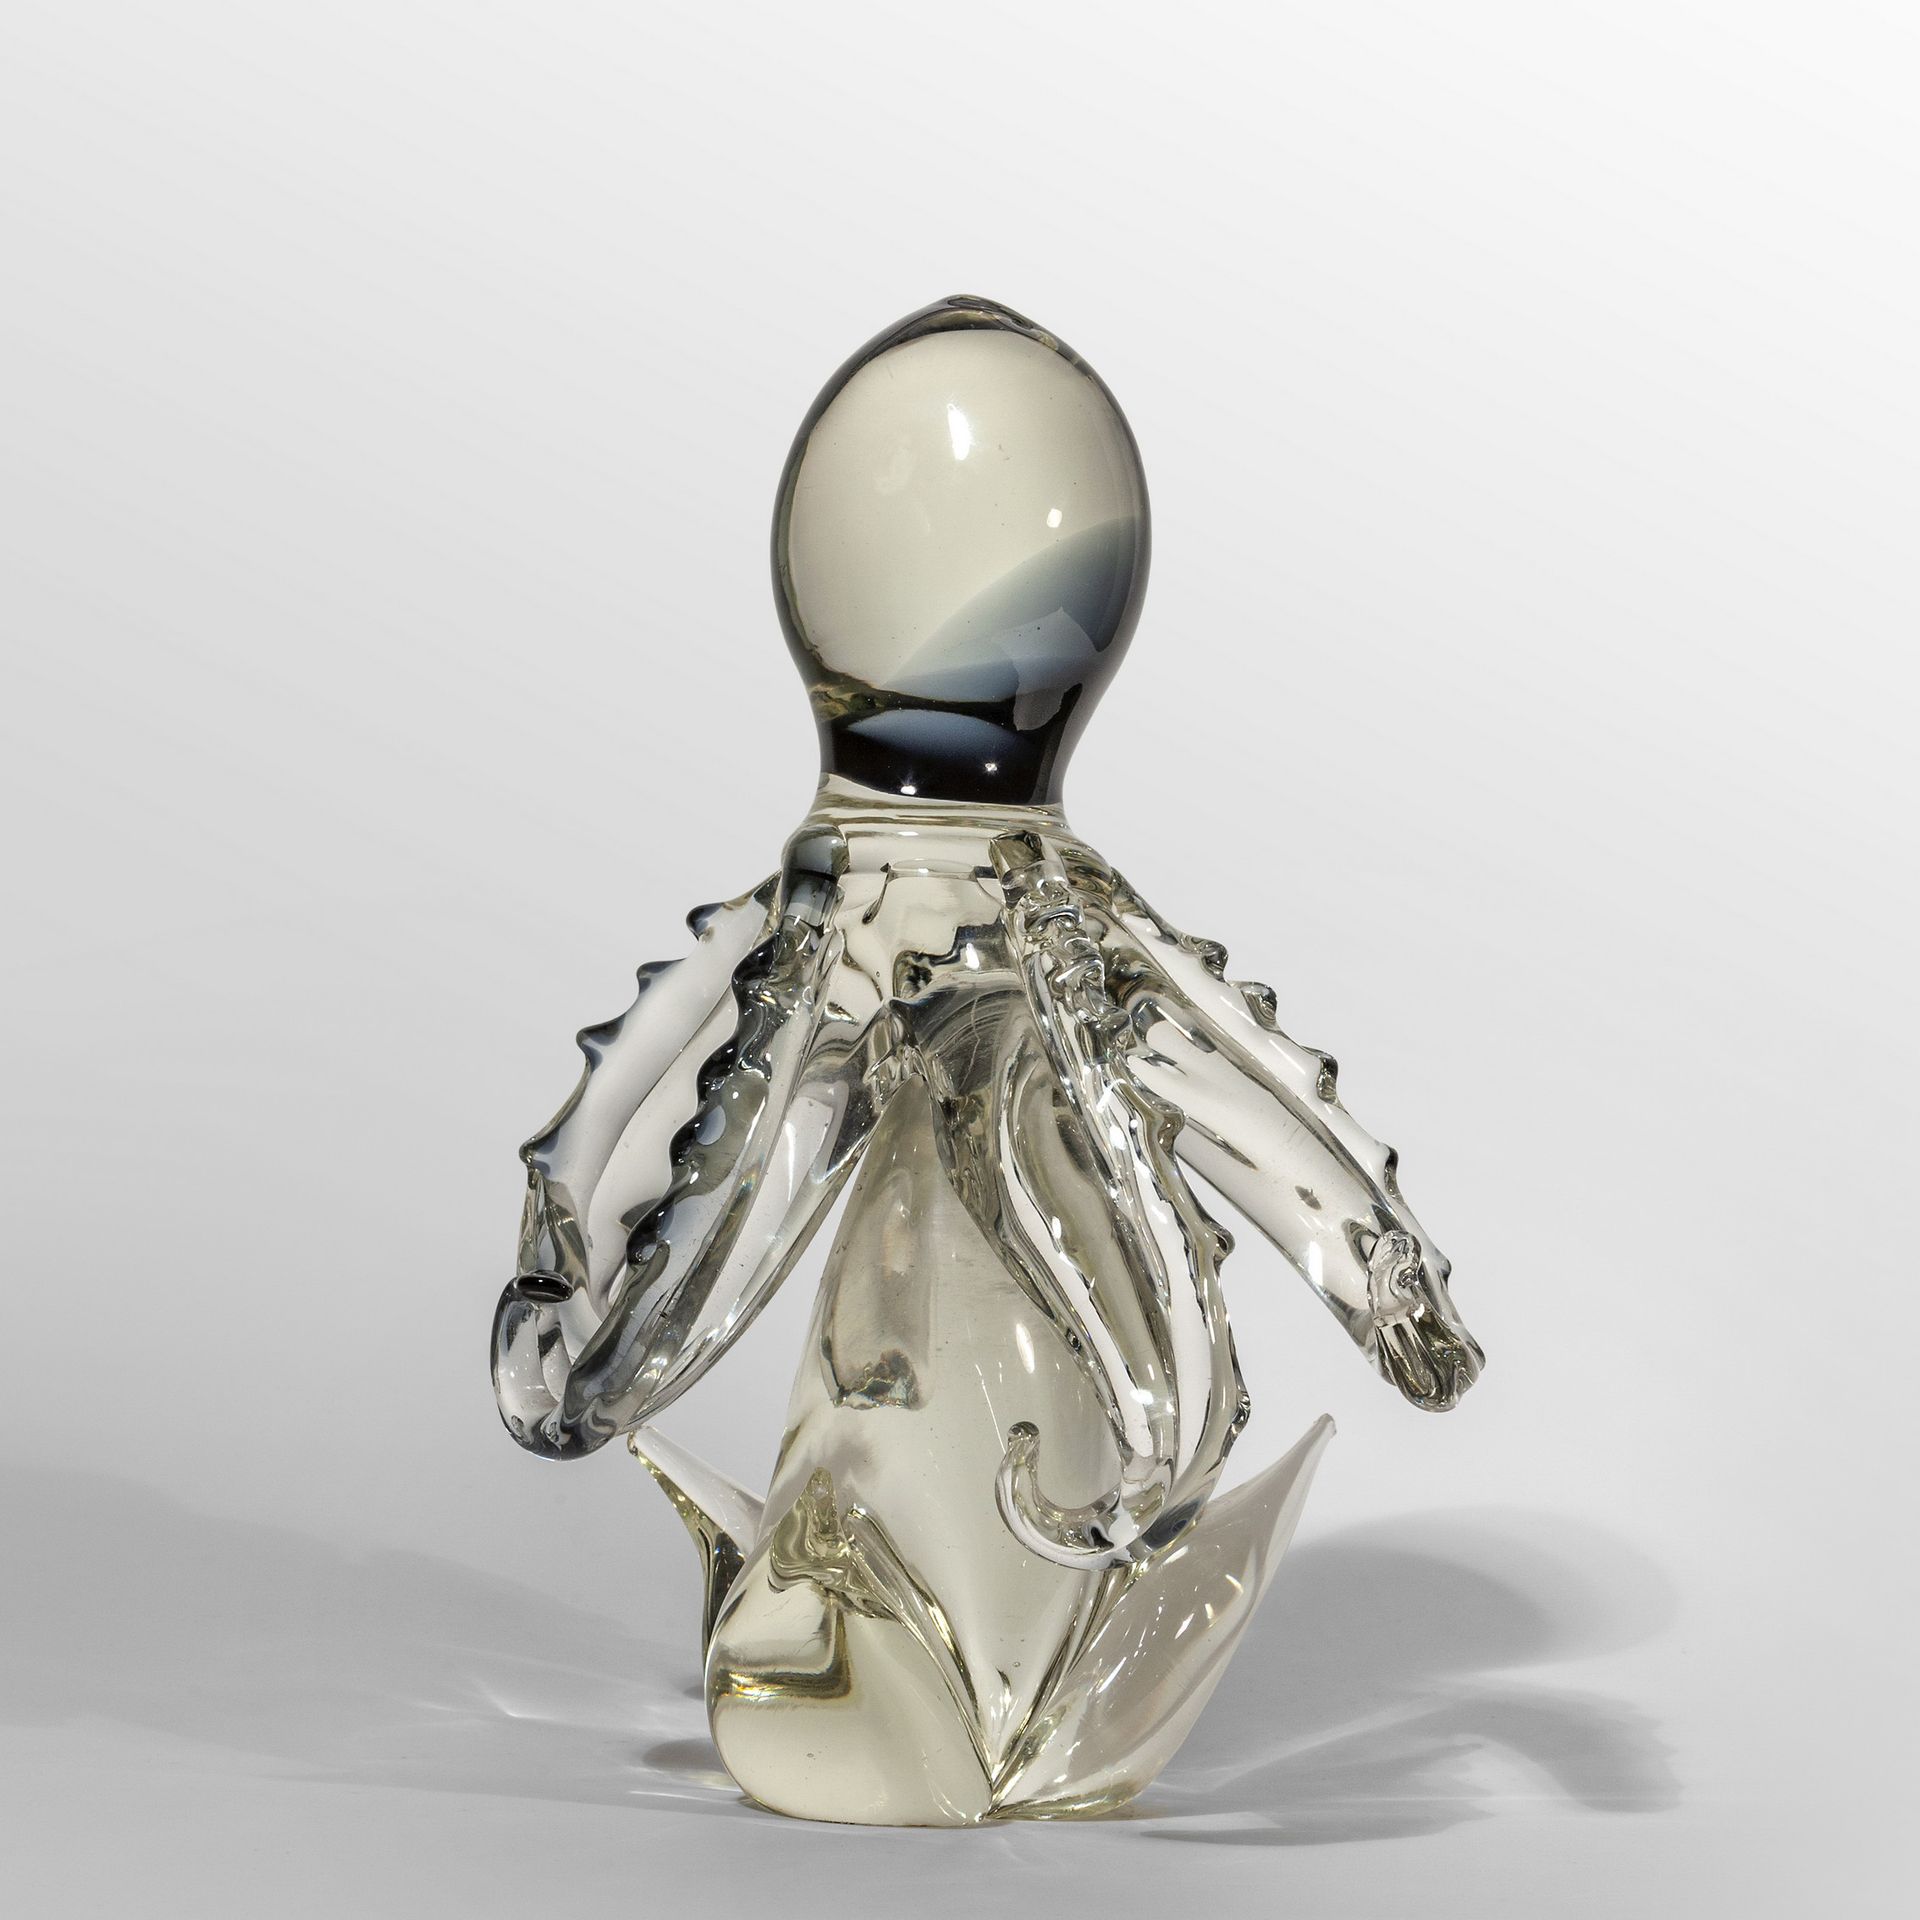 SEGUSO LIVIO LIVIO SEGUSO
Sculpture avec la figure d'une pieuvre en cristal mass&hellip;